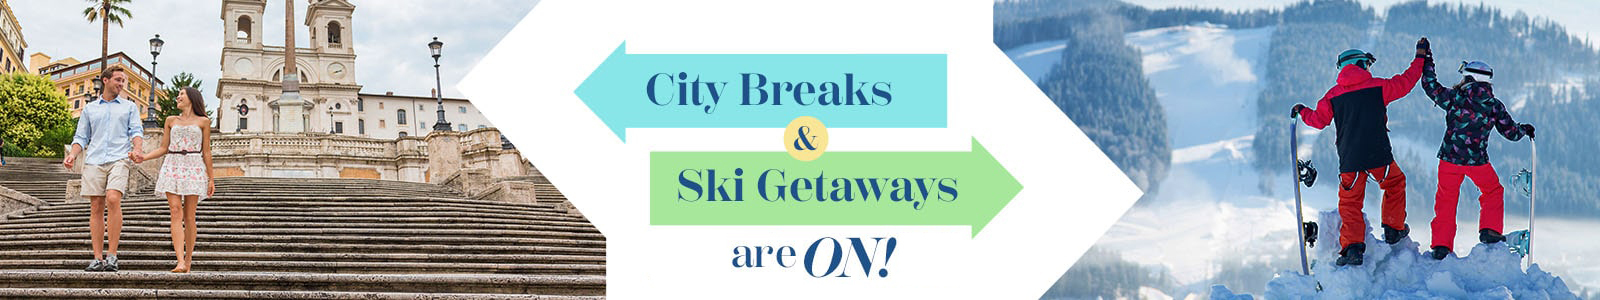 City Breaks & Ski Getaways Travel Now are On!